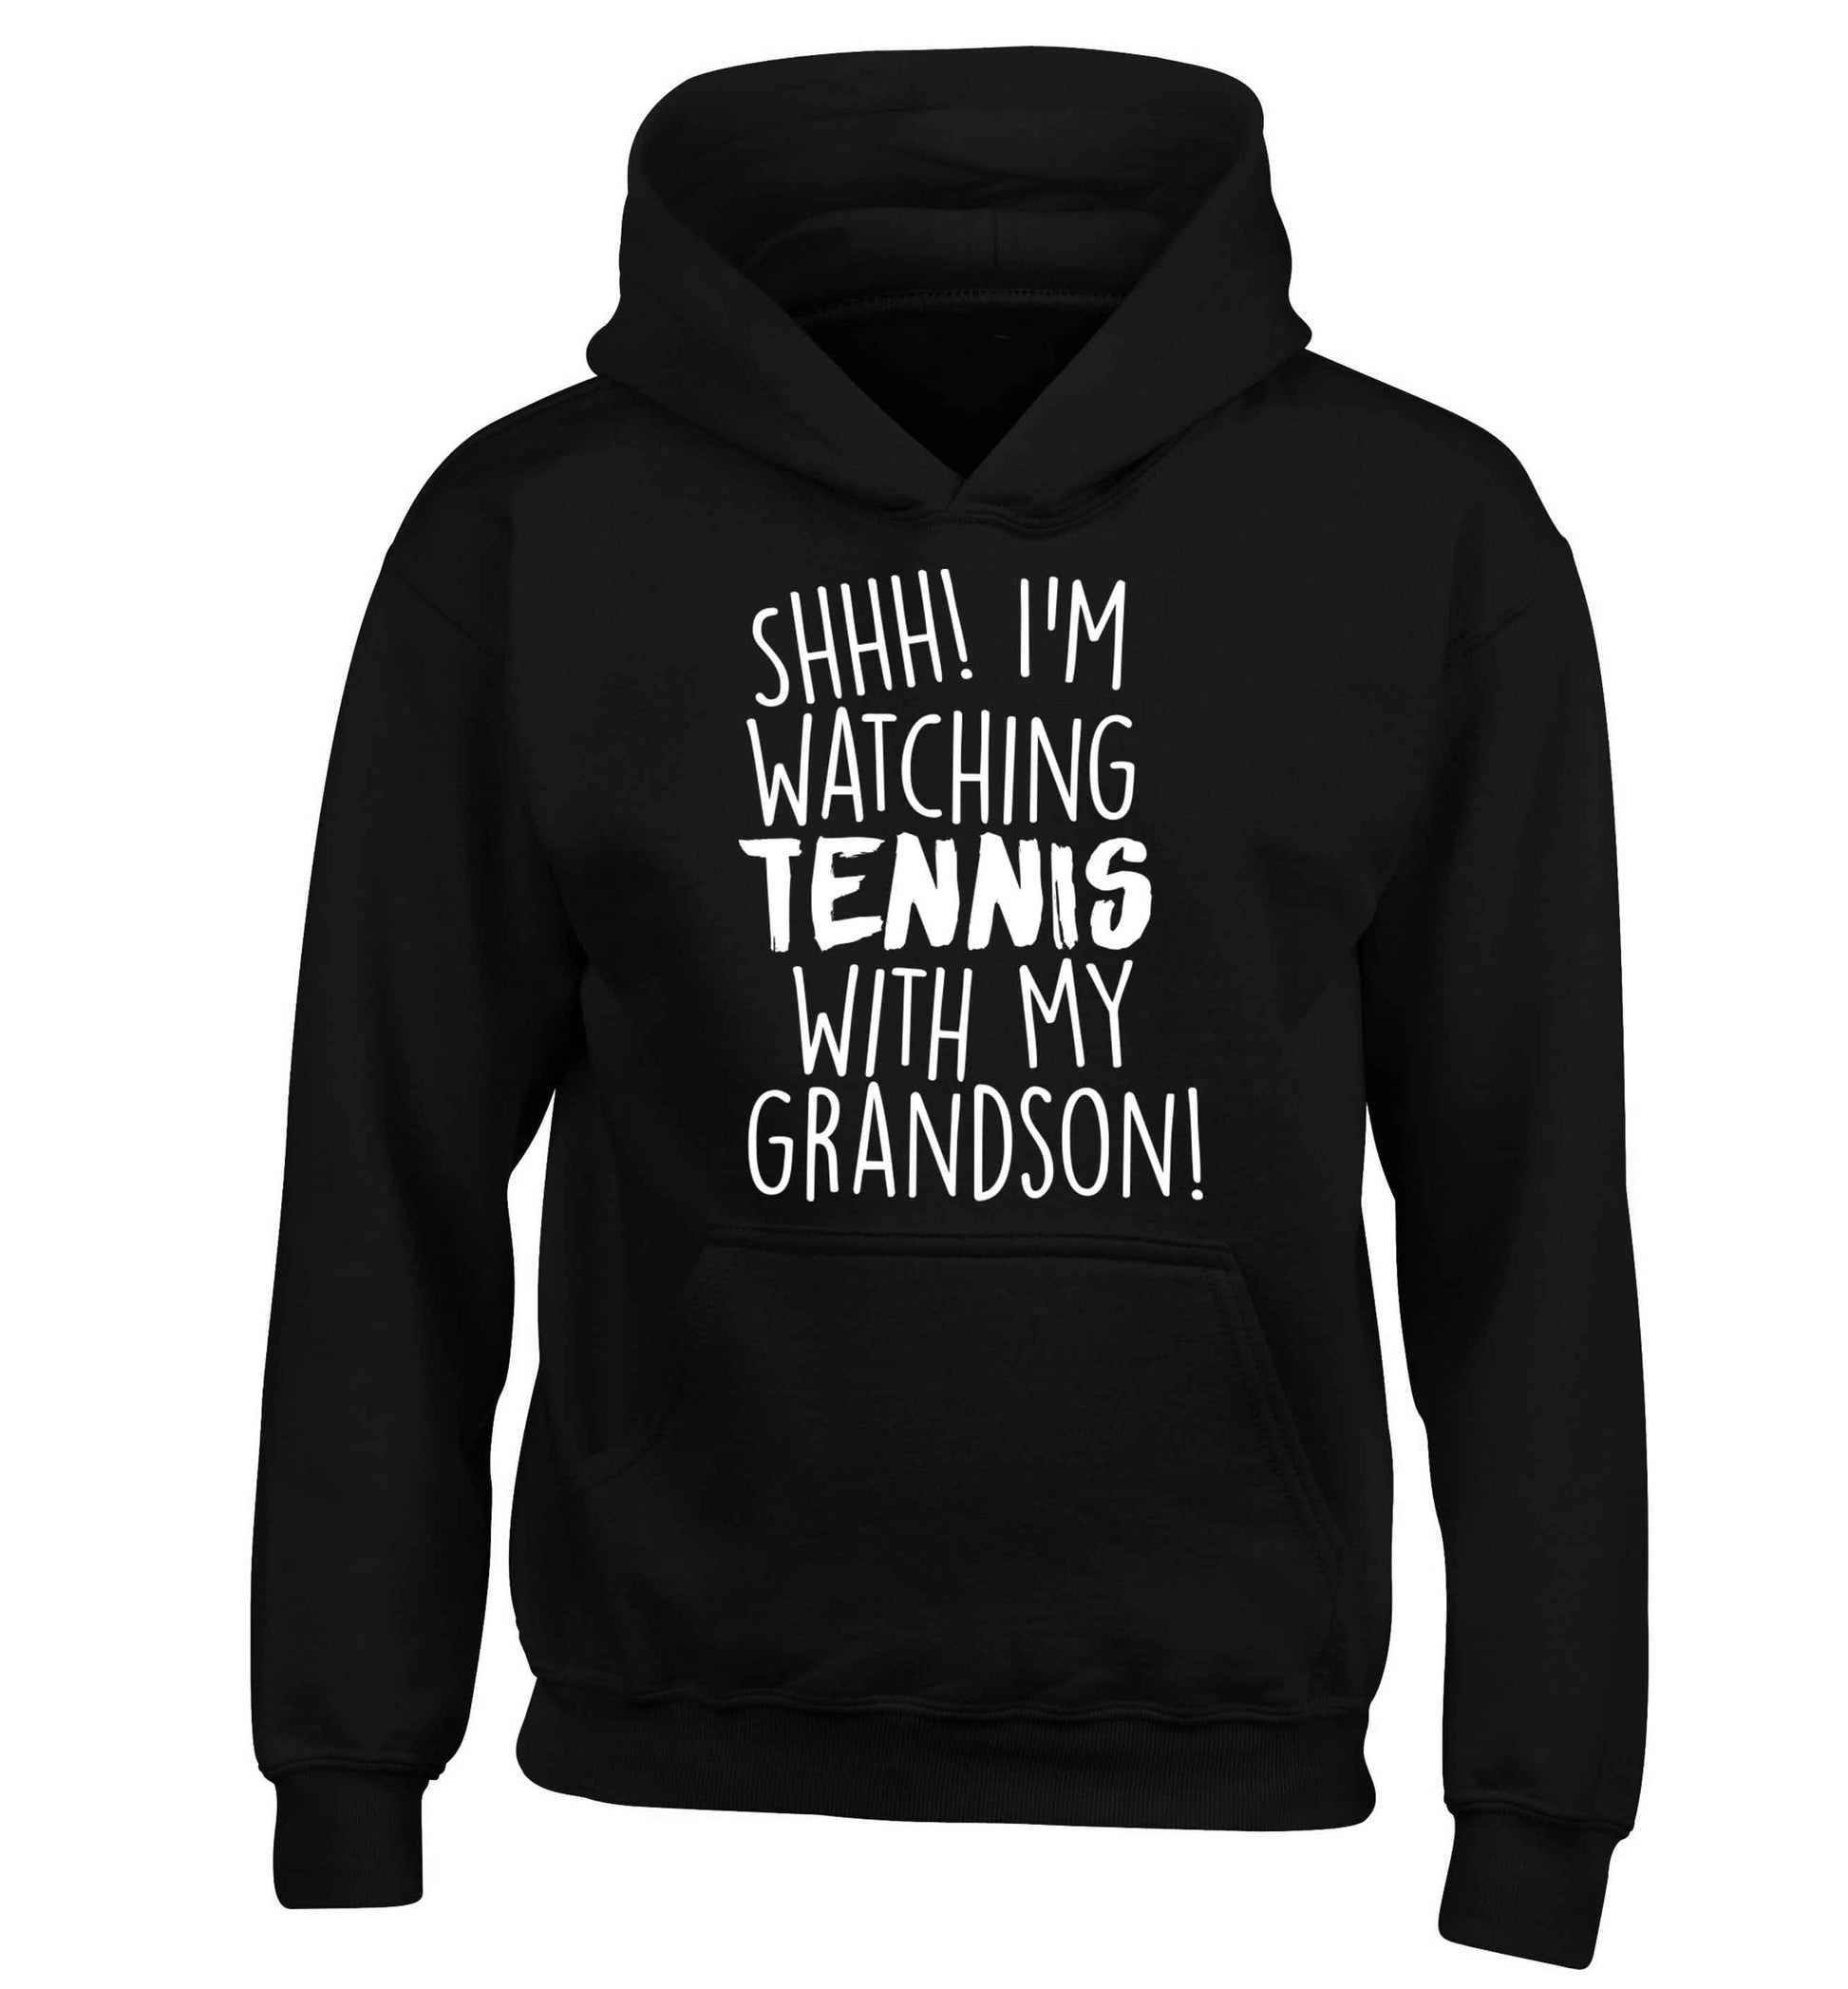 Shh! I'm watching tennis with my grandson! children's black hoodie 12-13 Years